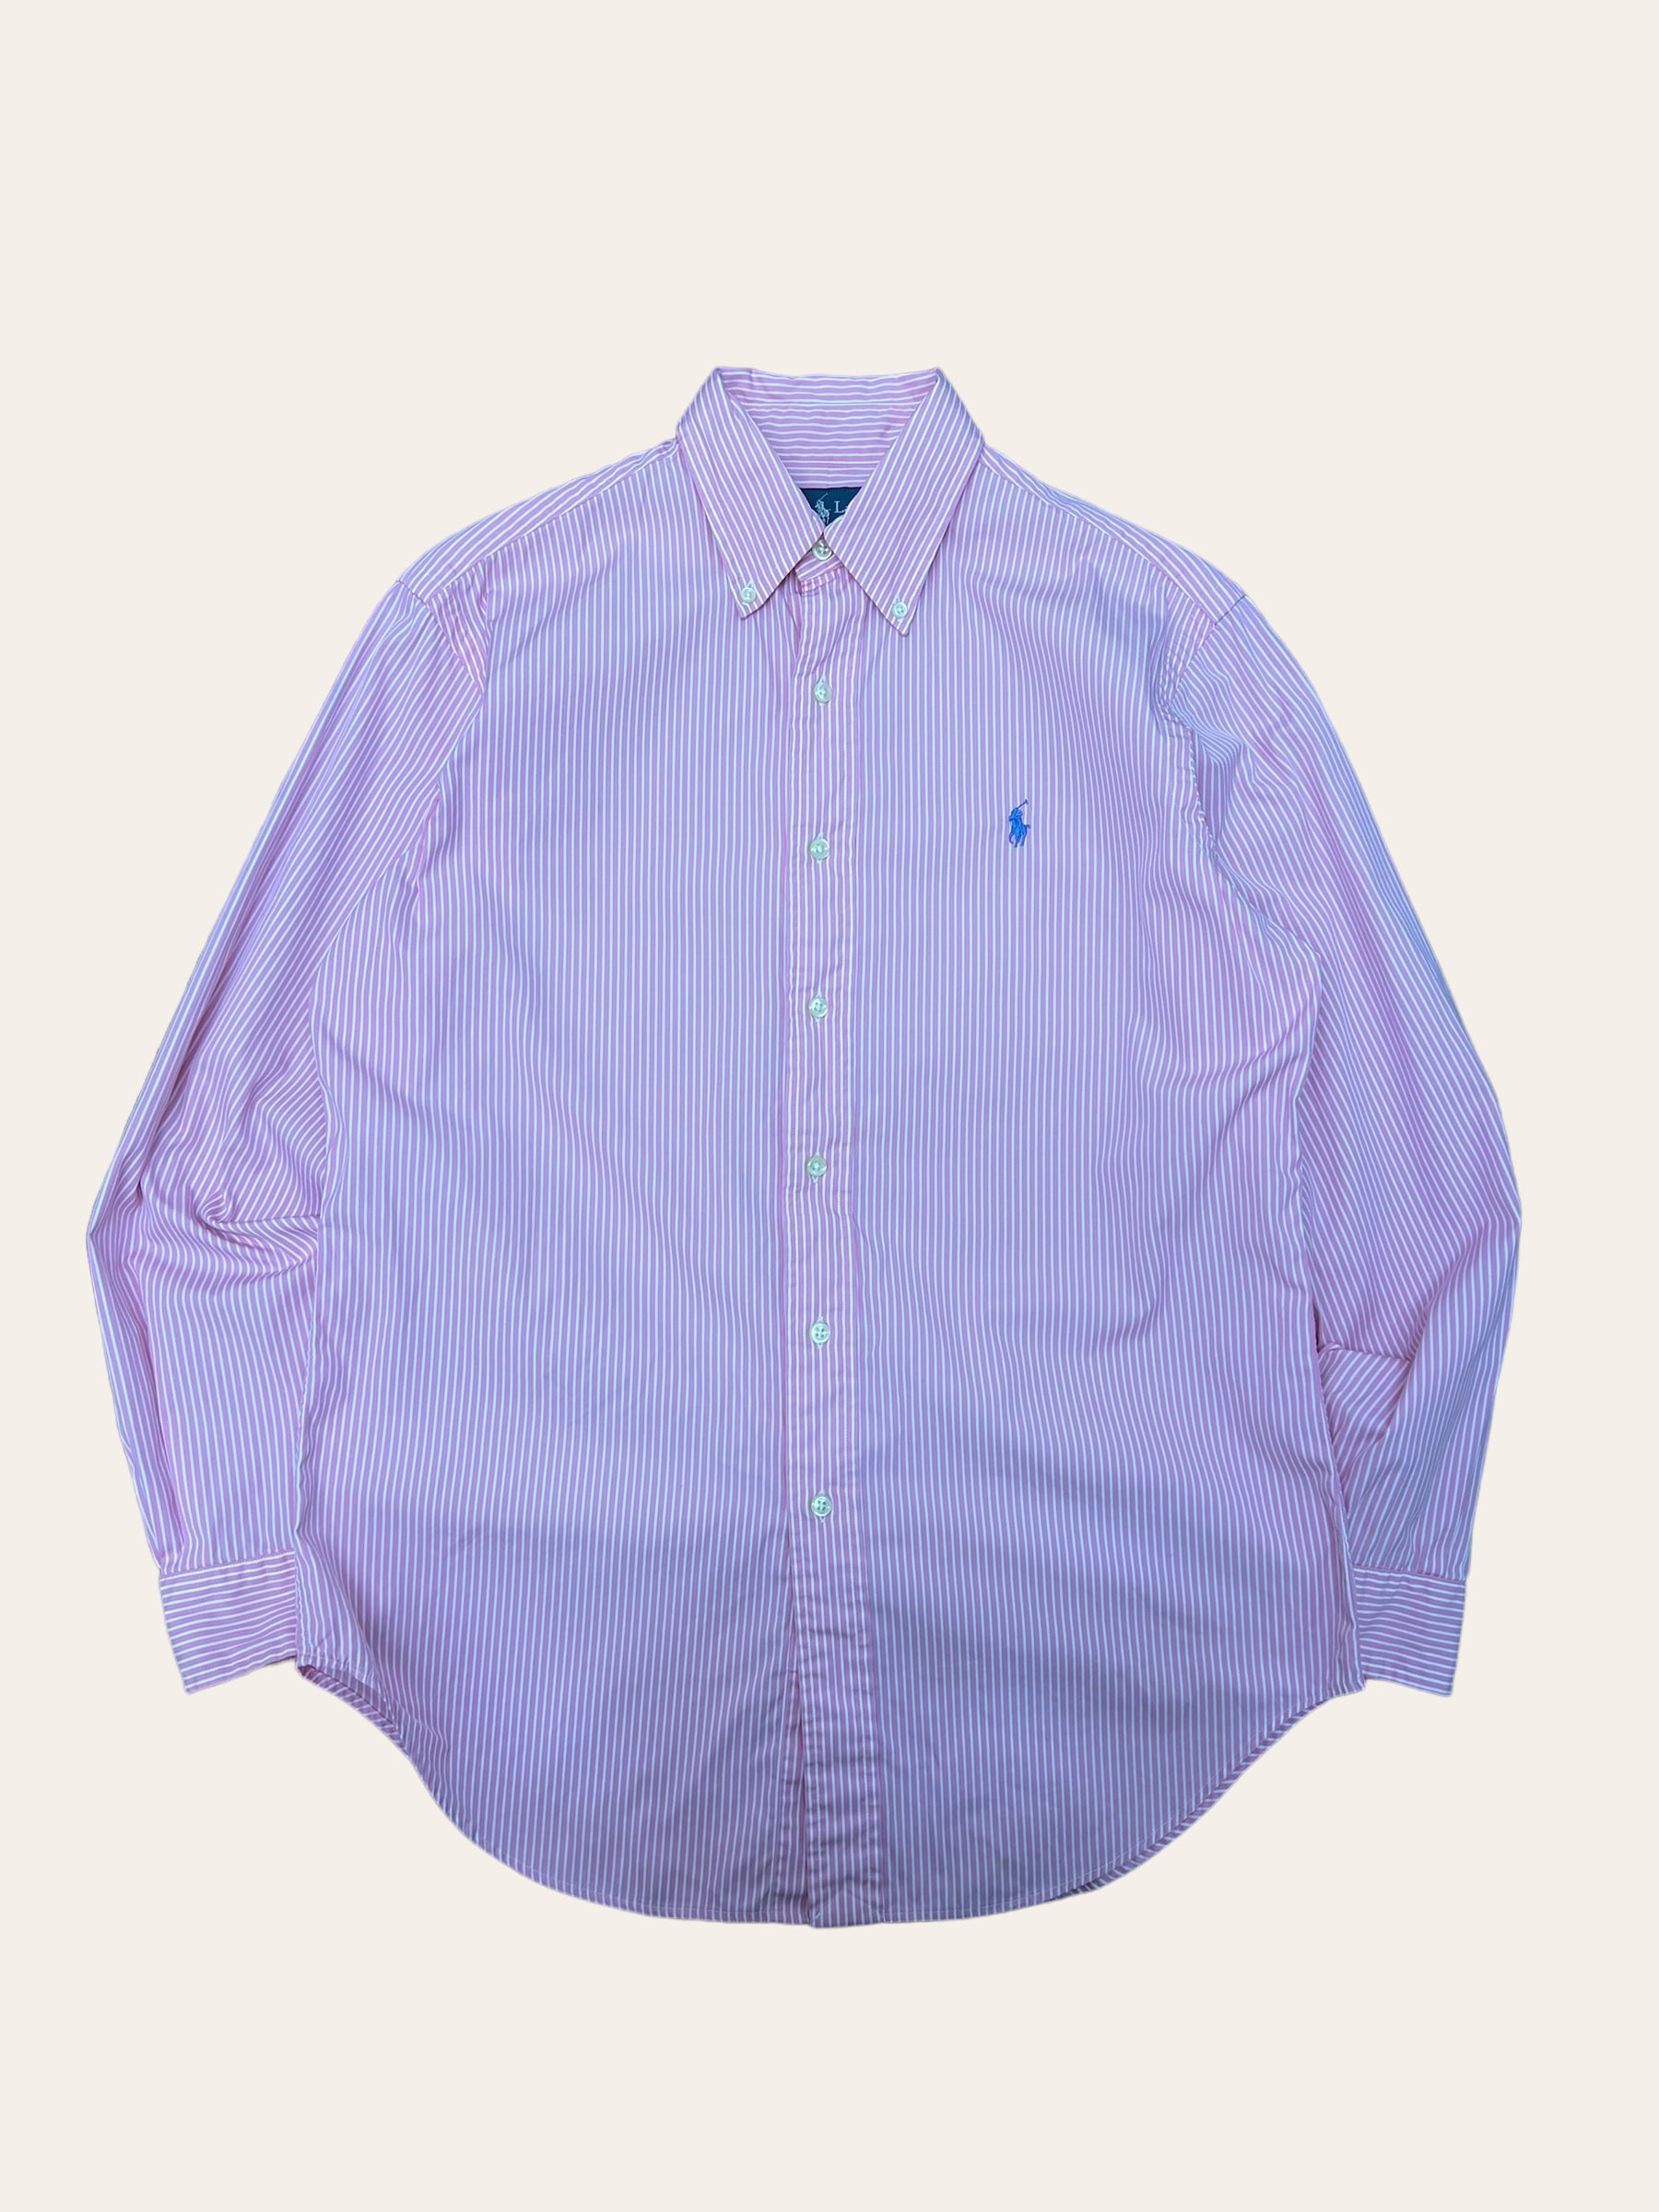 Polo ralph lauren pink color stripe shirt 15